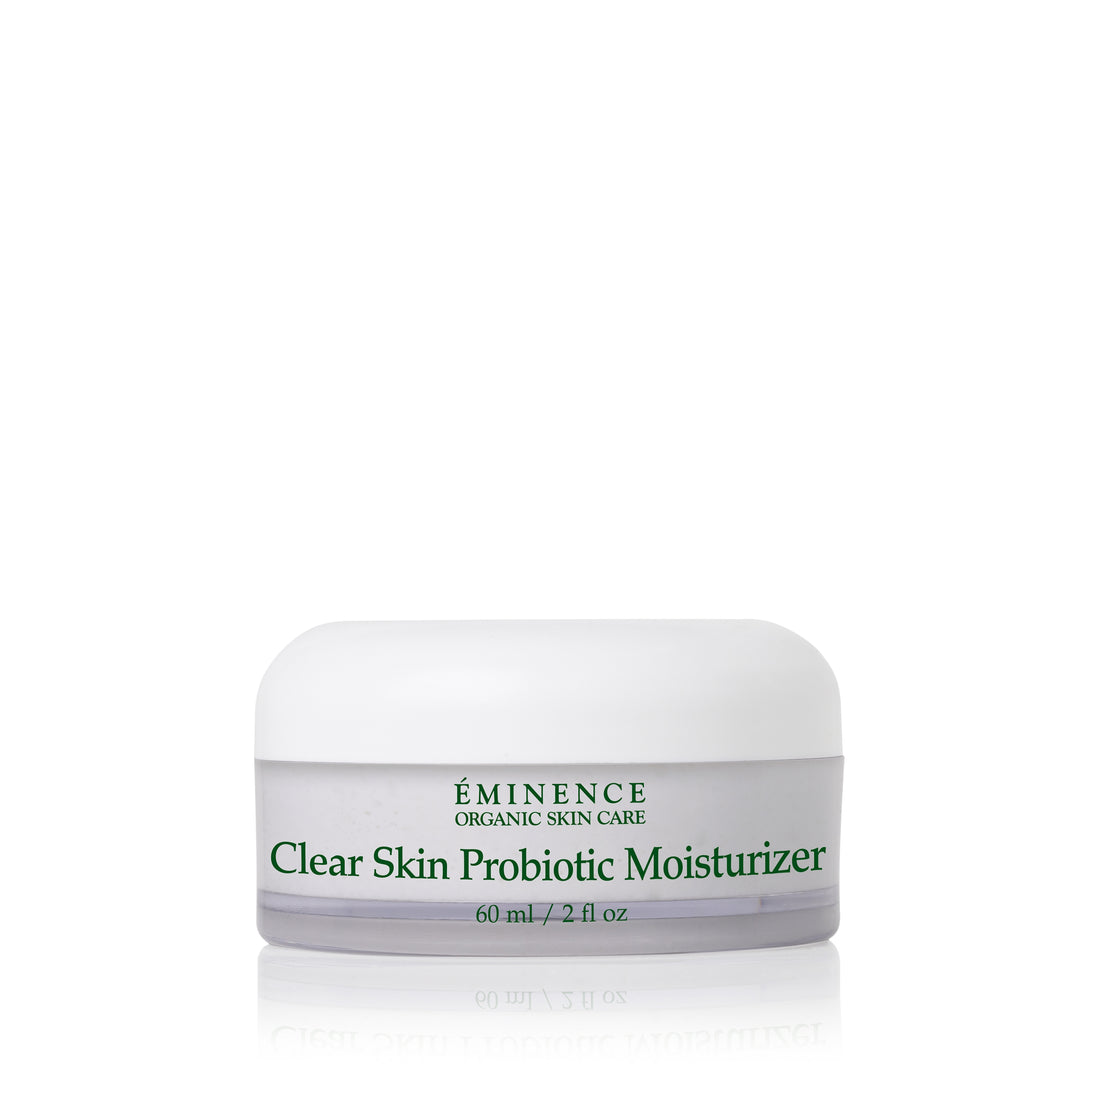 Clear Skin Probiotic Moisturizer | For problem prone skin